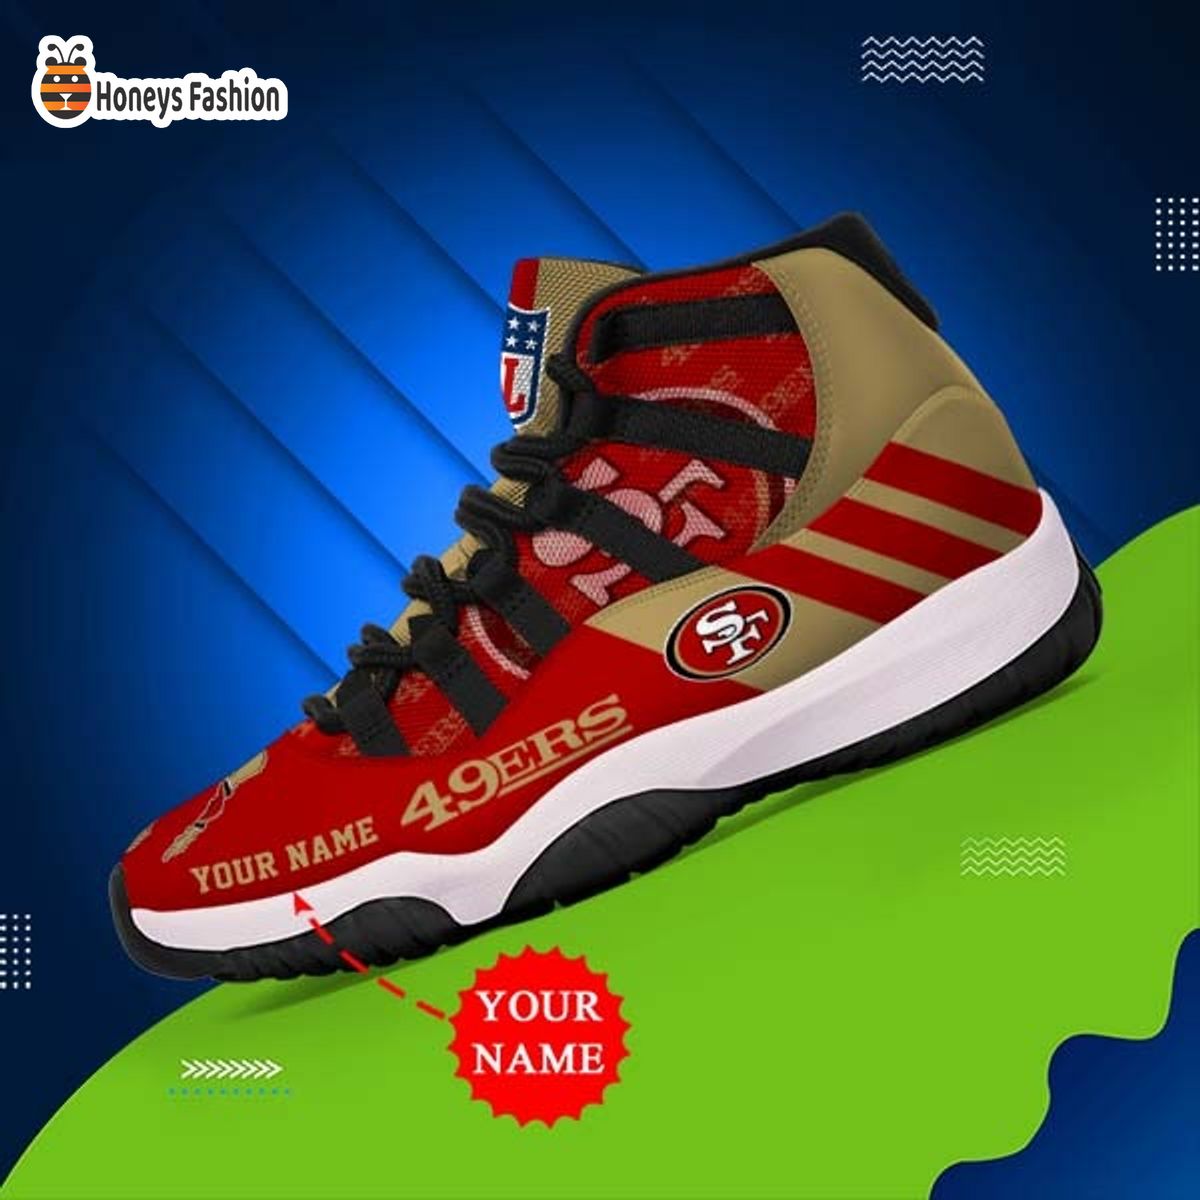 San Francisco 49ers NFL Adidas Personalized Air Jordan 11 Shoes